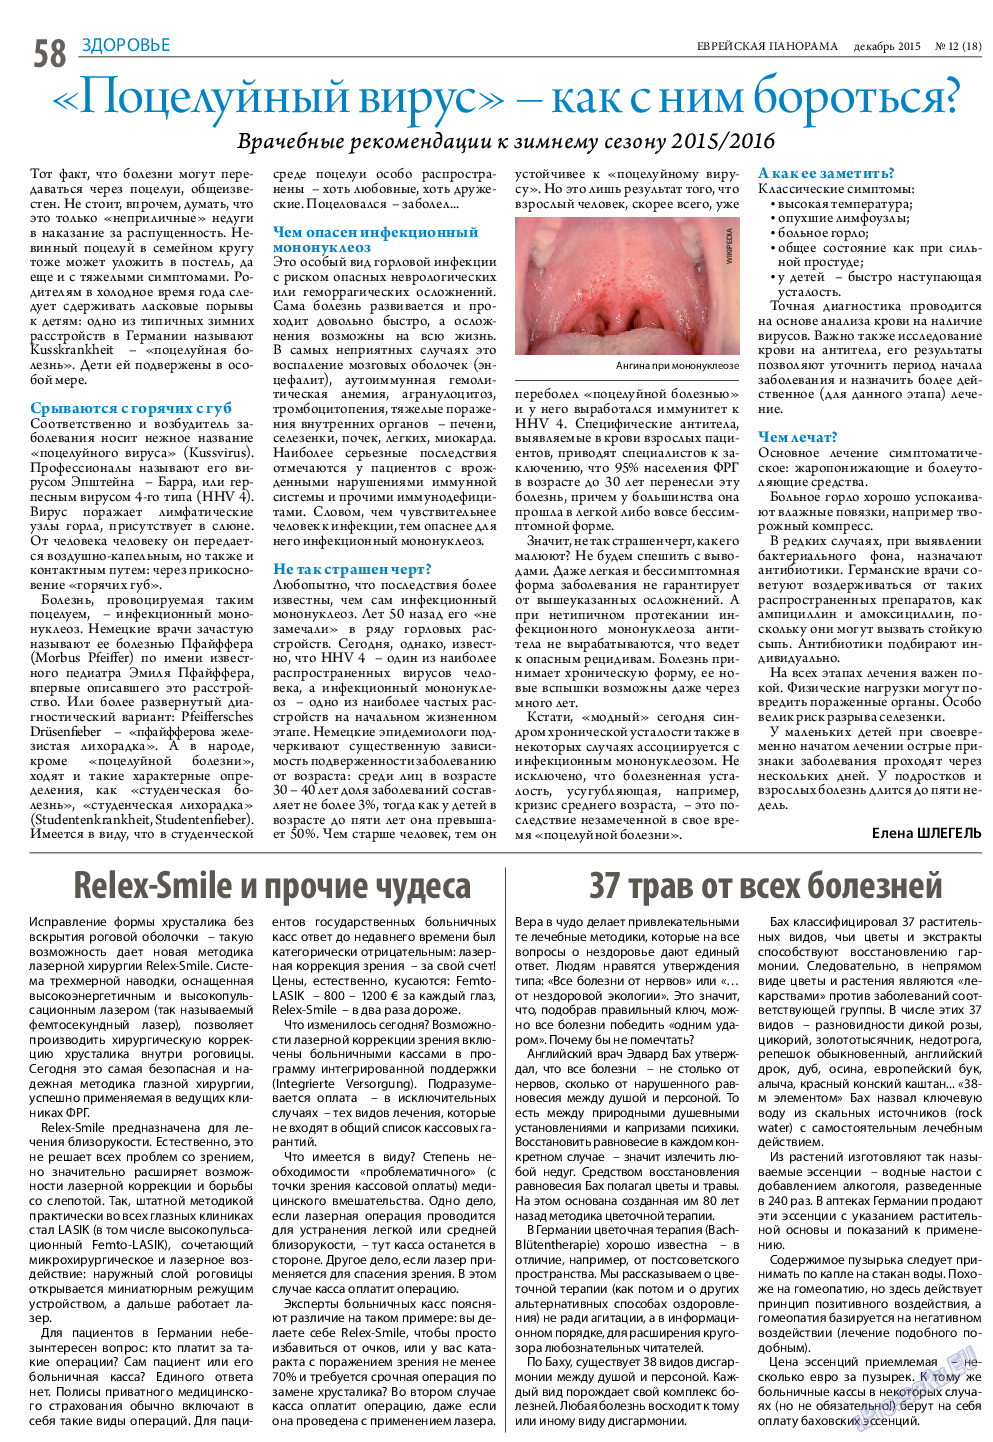 Еврейская панорама, газета. 2015 №12 стр.58